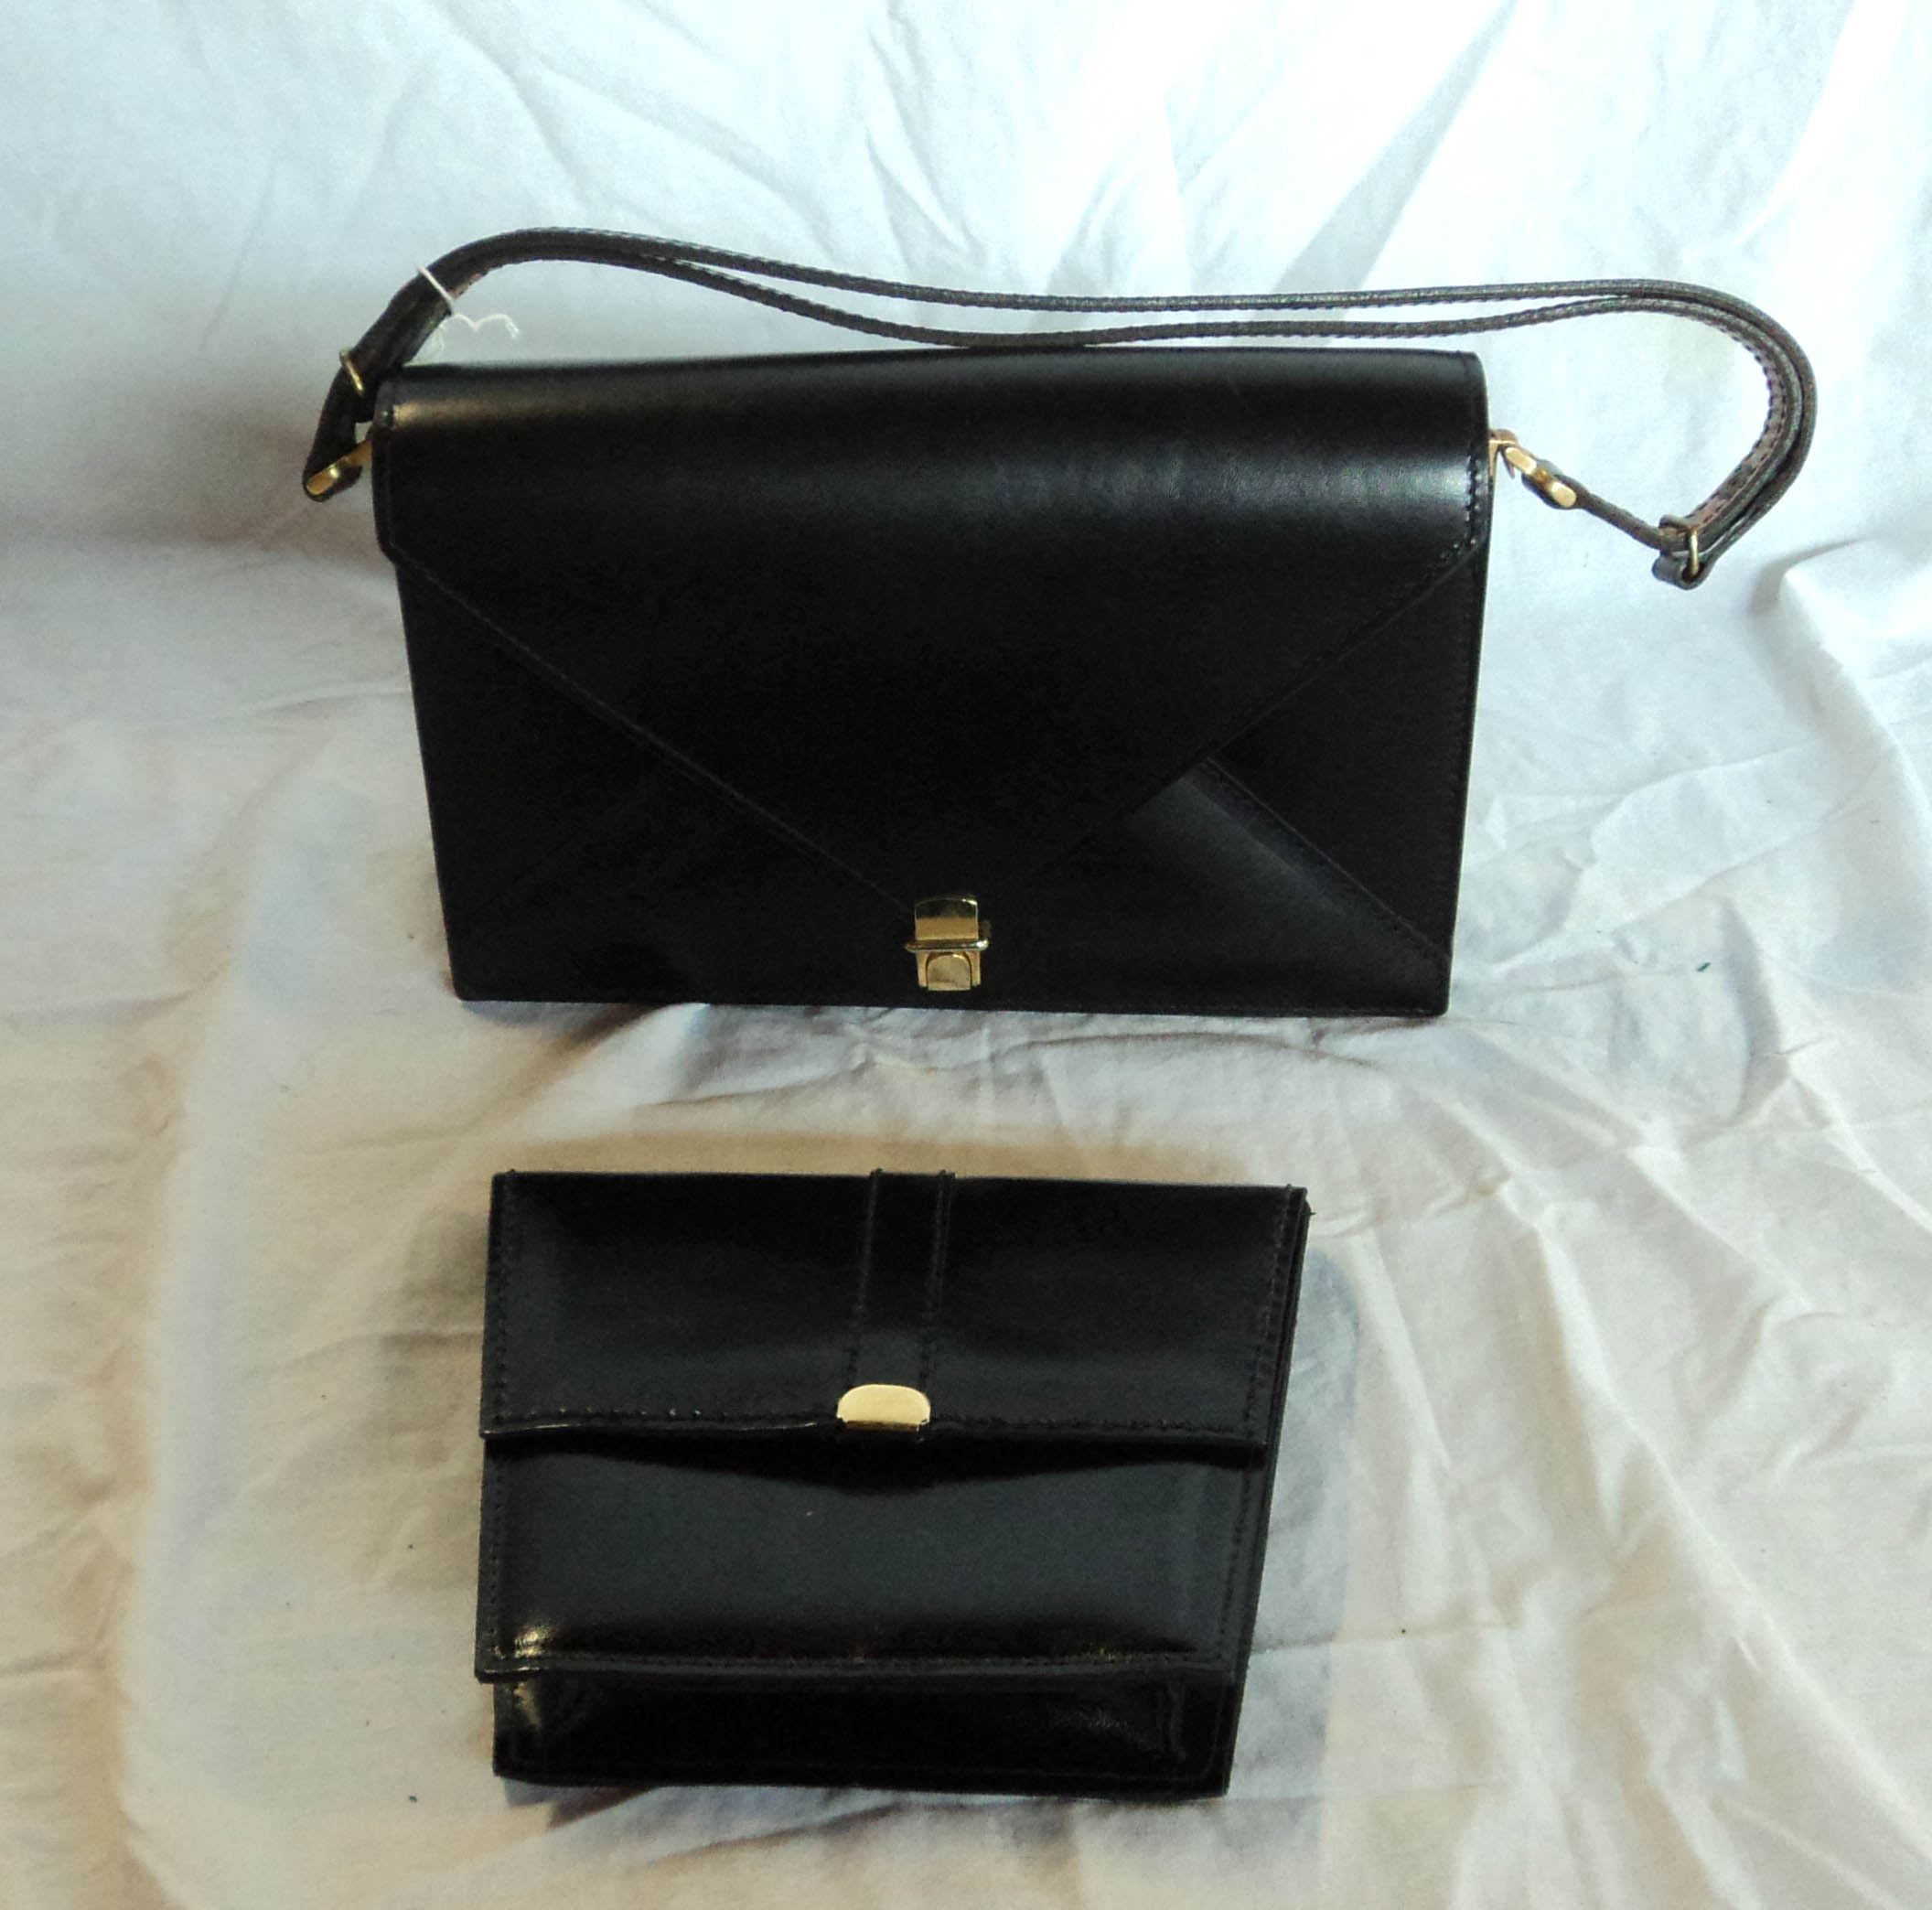 A black leather handbag and similar clutch